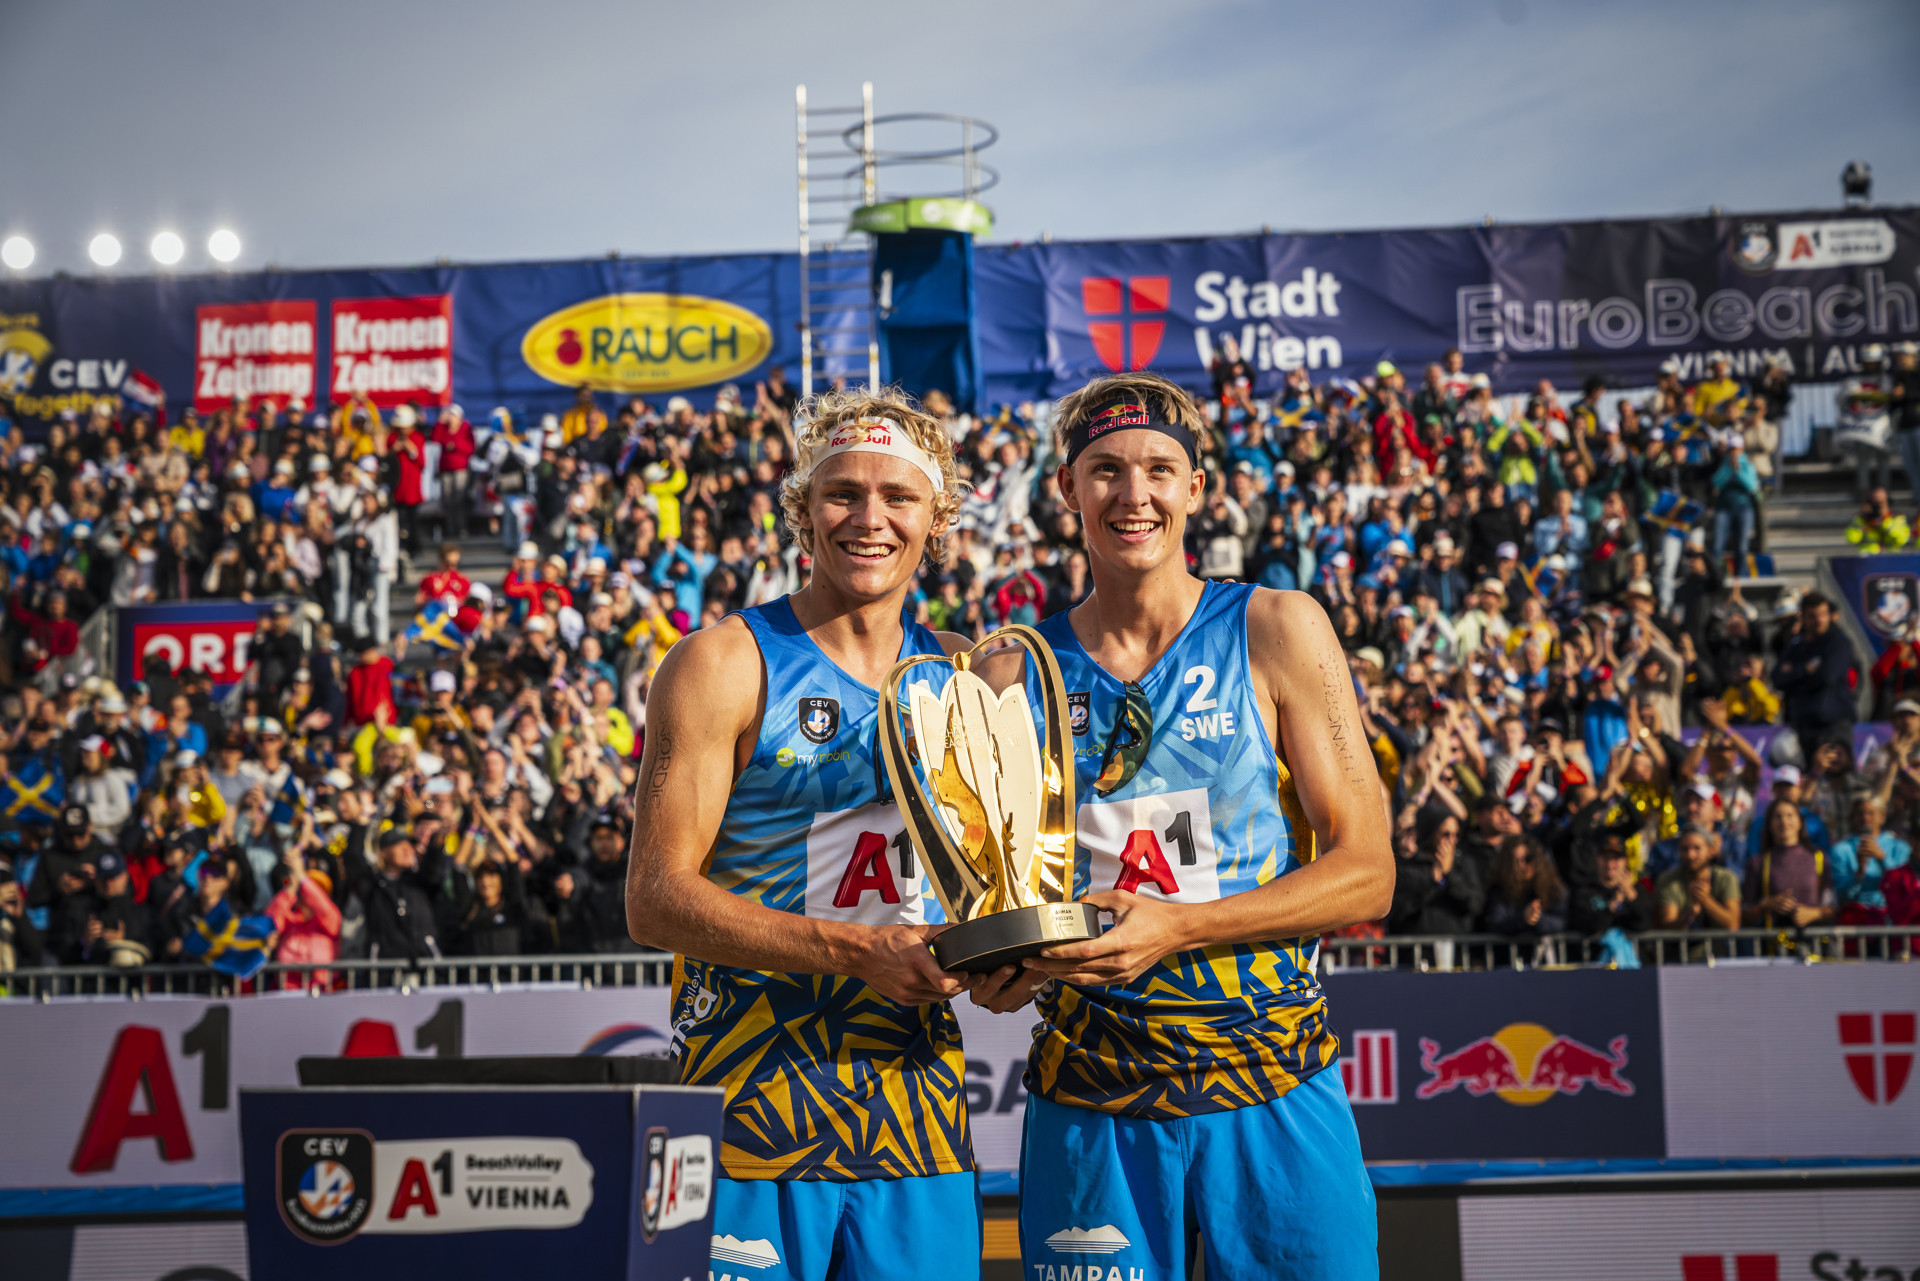 Swedish pair retain men’s title at European Beach Volleyball Championships 